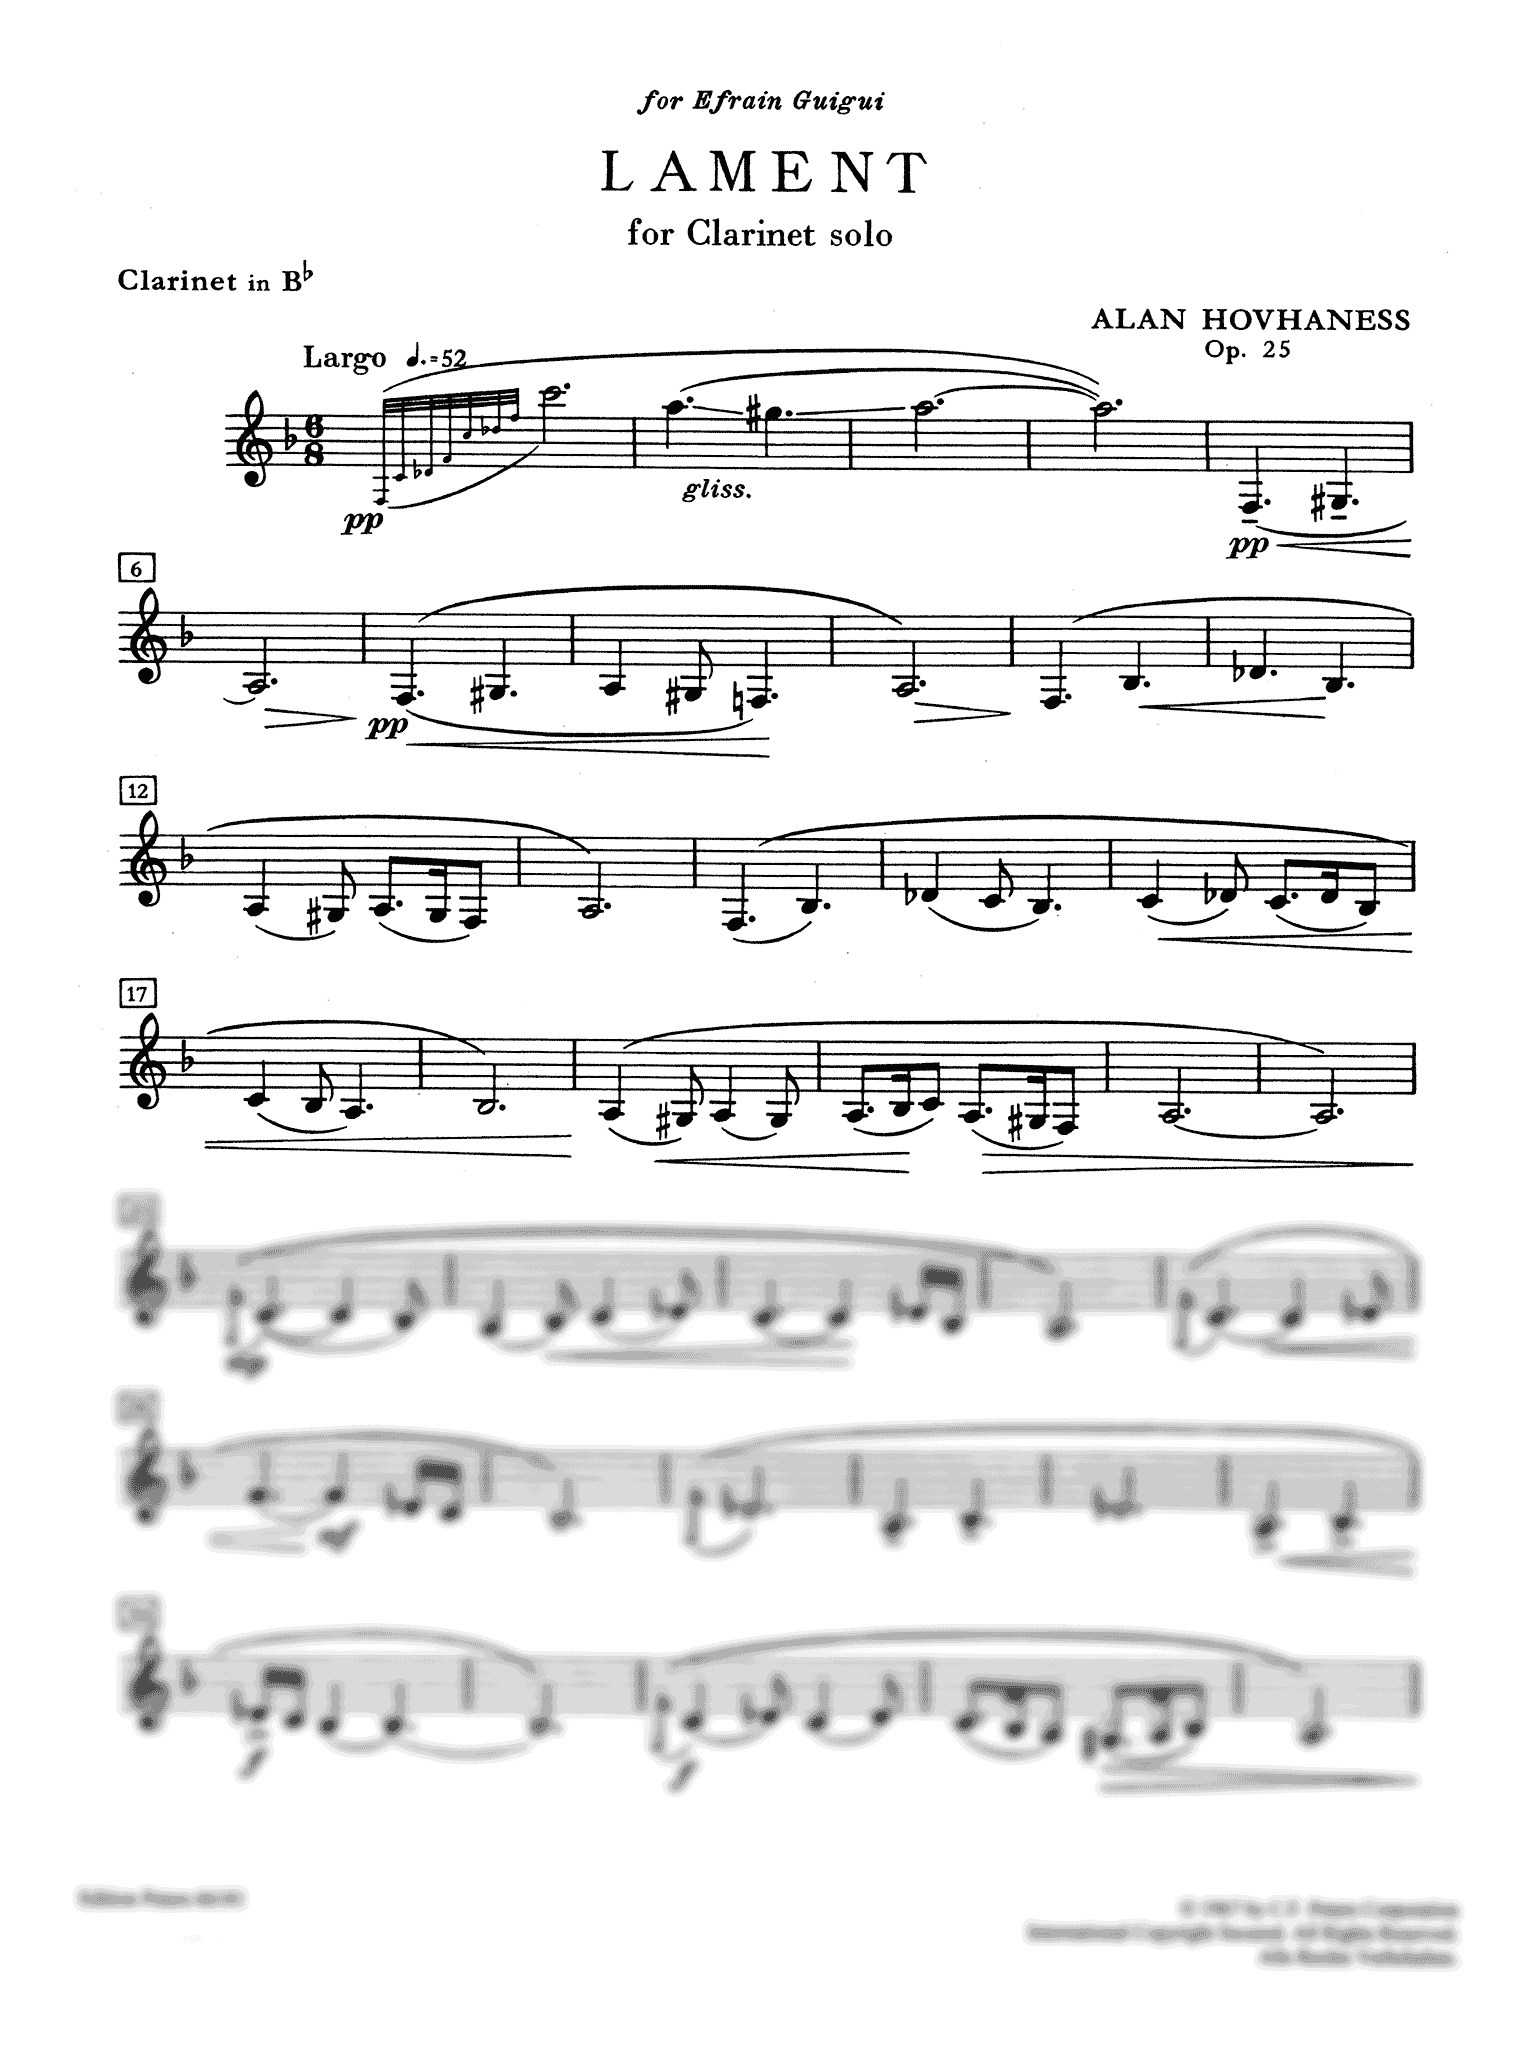 Hovhaness Lament, Op. 25 unaccompanied clarinet page 1